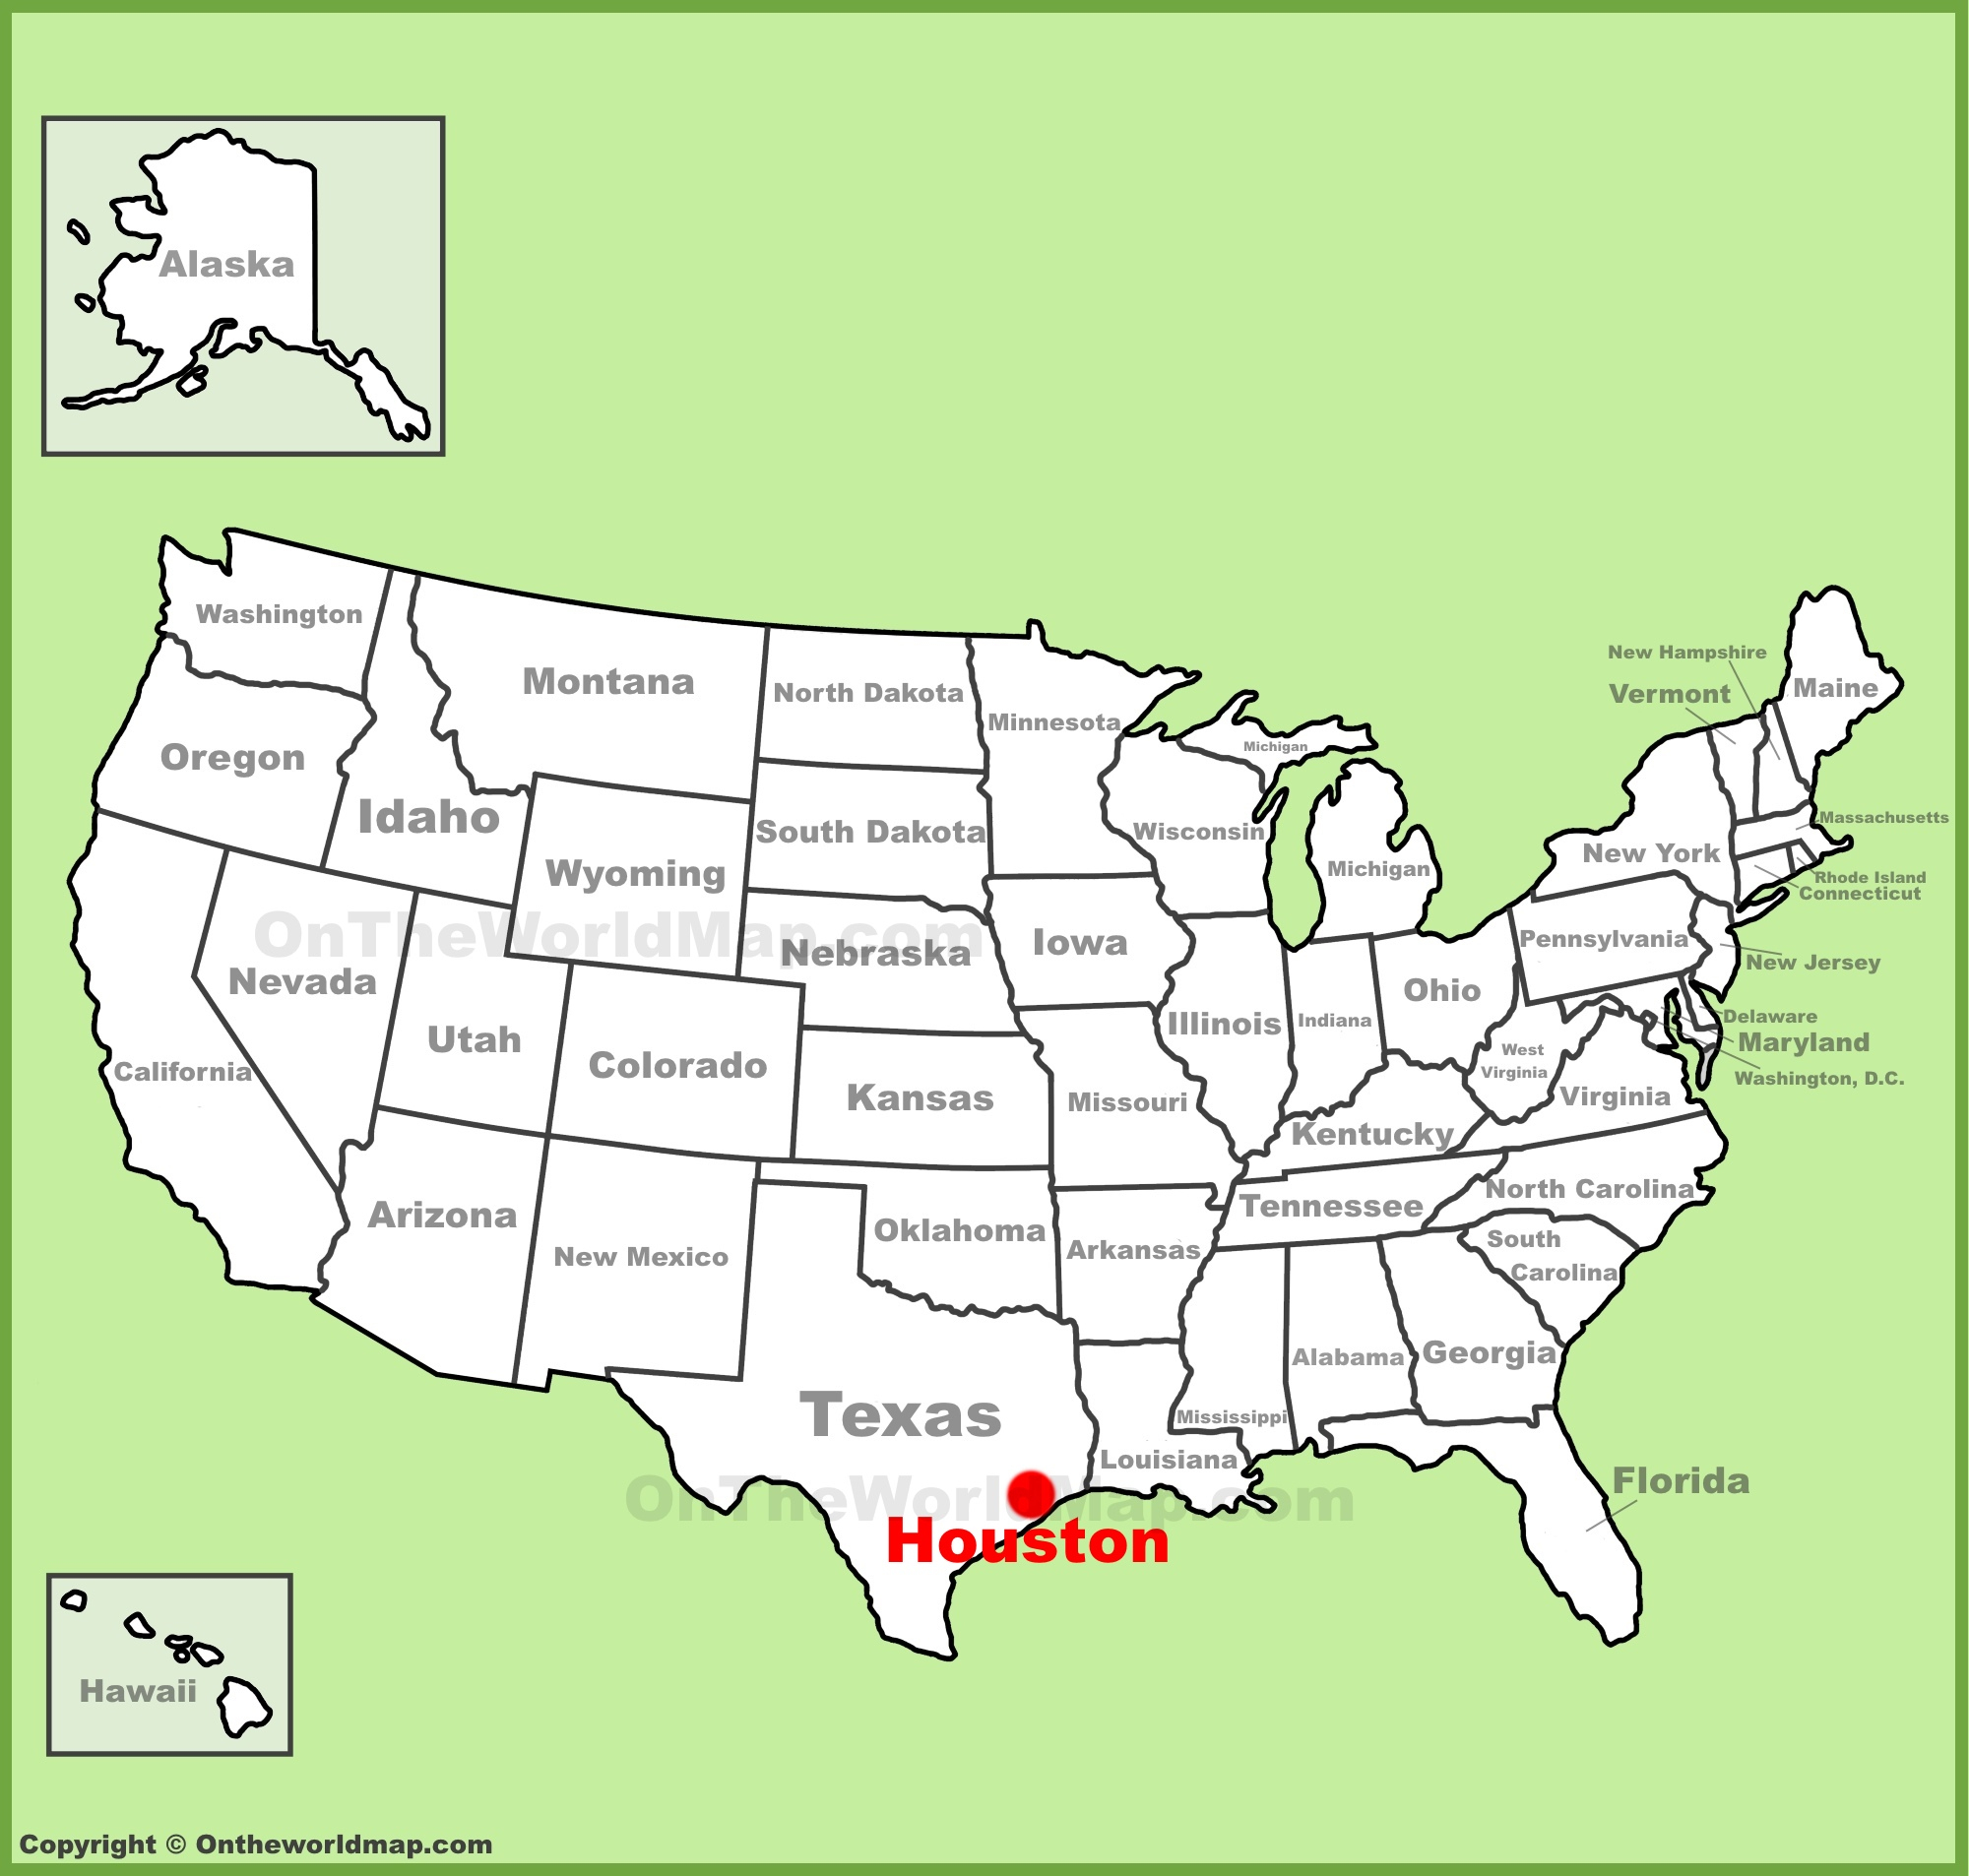 Houston Location On The U.s. Map - Houston Texas Map